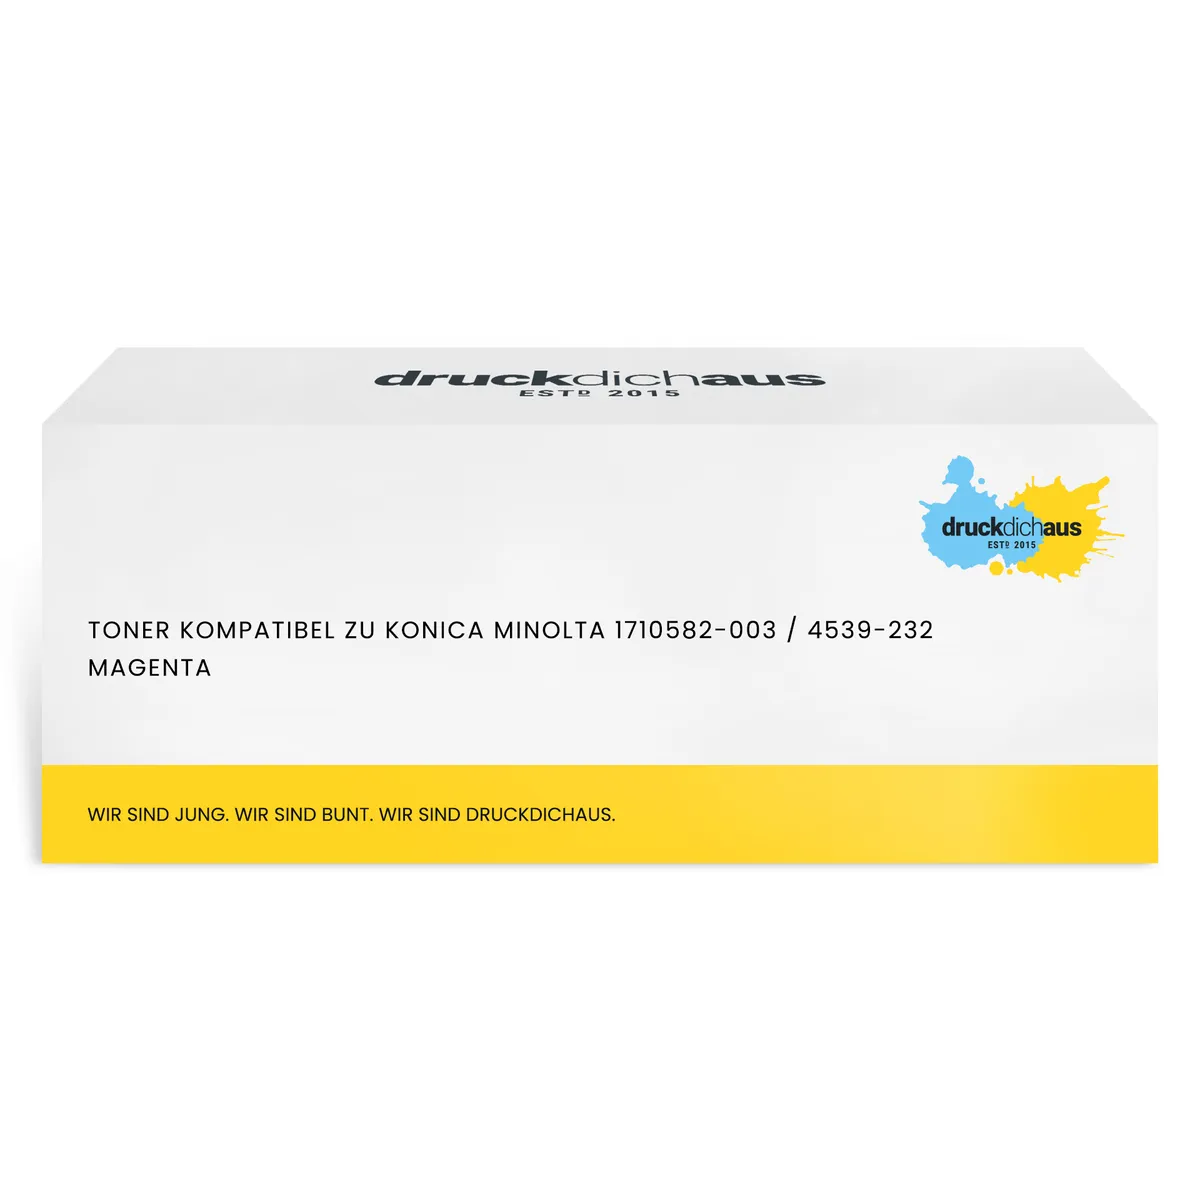 Toner kompatibel zu Konica Minolta 1710582-003 / 4539-232 magenta